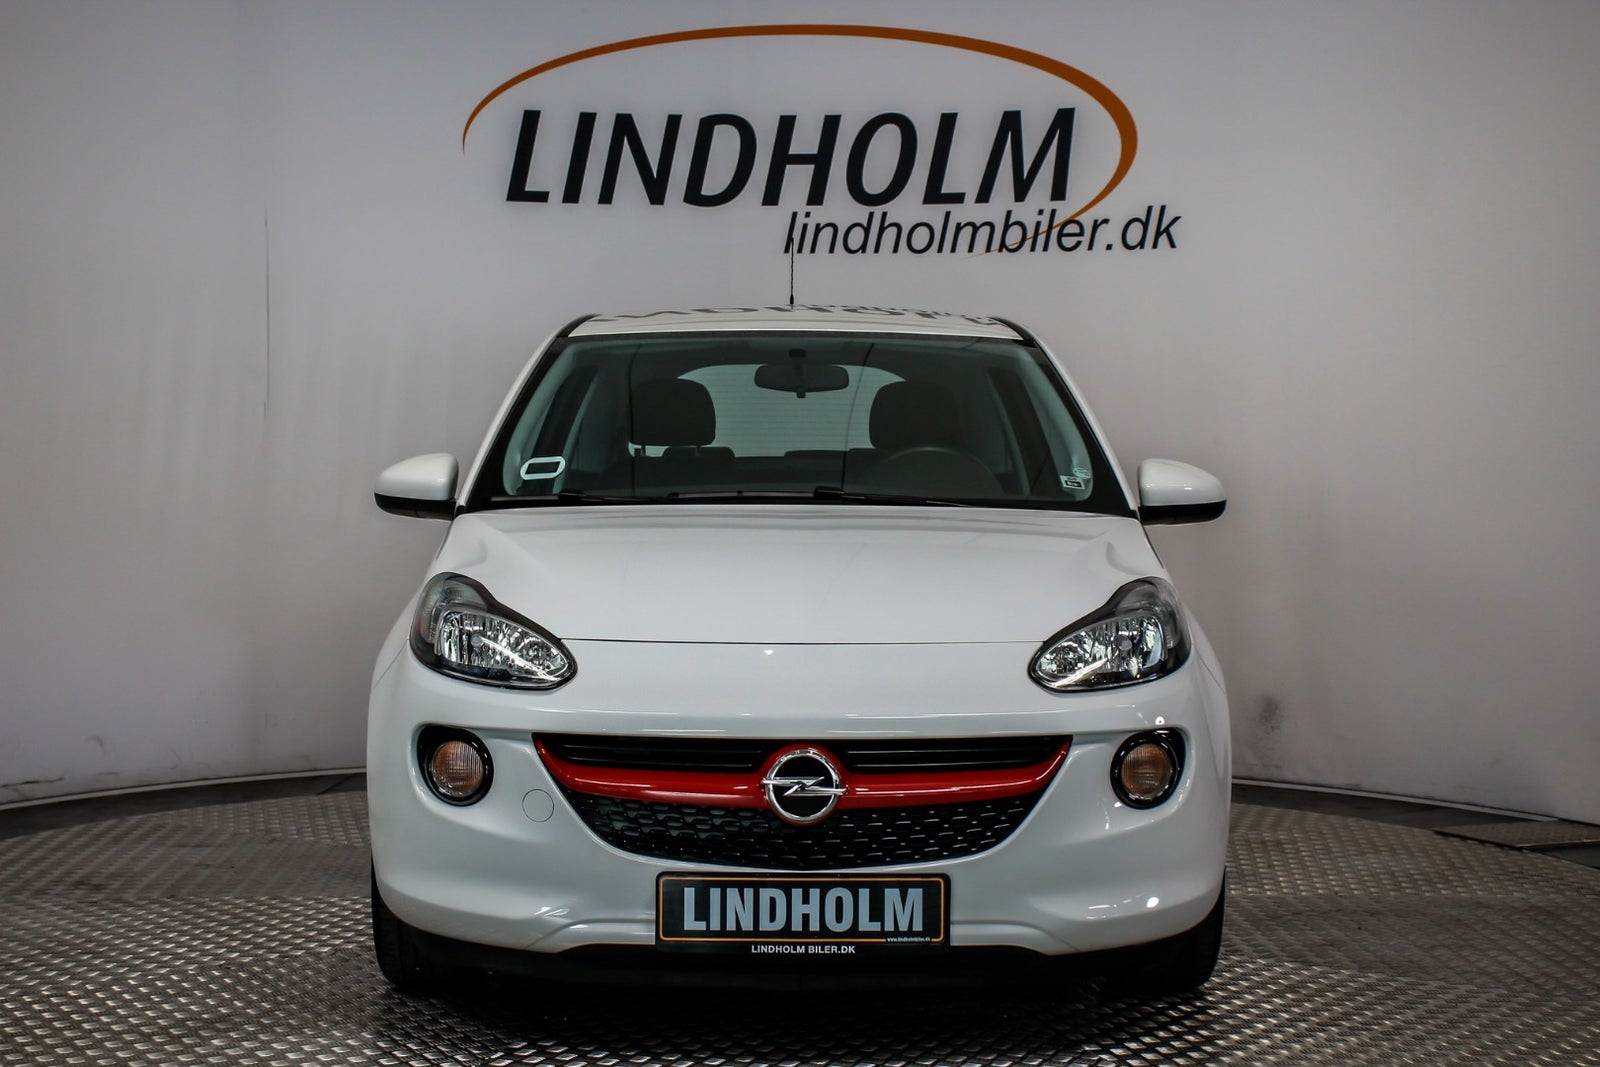 Opel Adam 2016